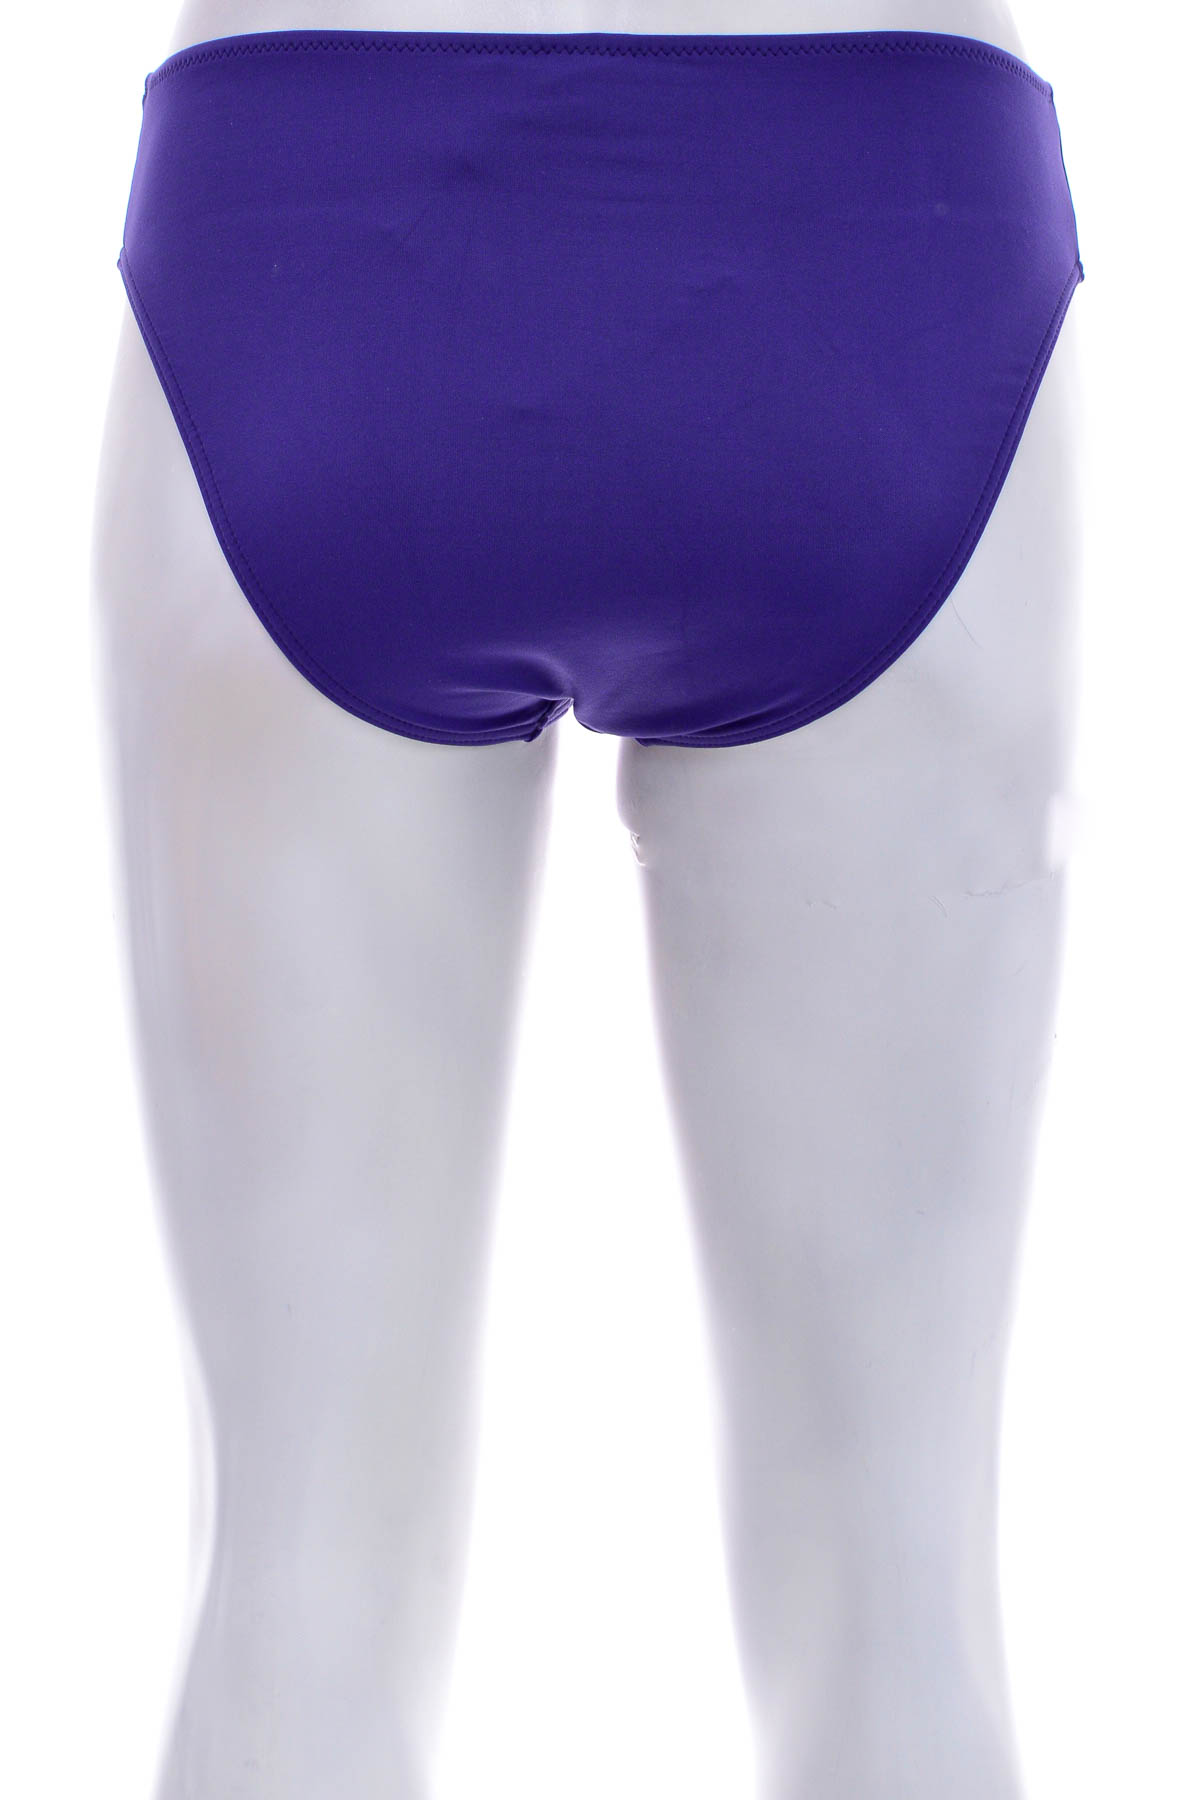 Women's swimsuit bottoms - Cyell - 1